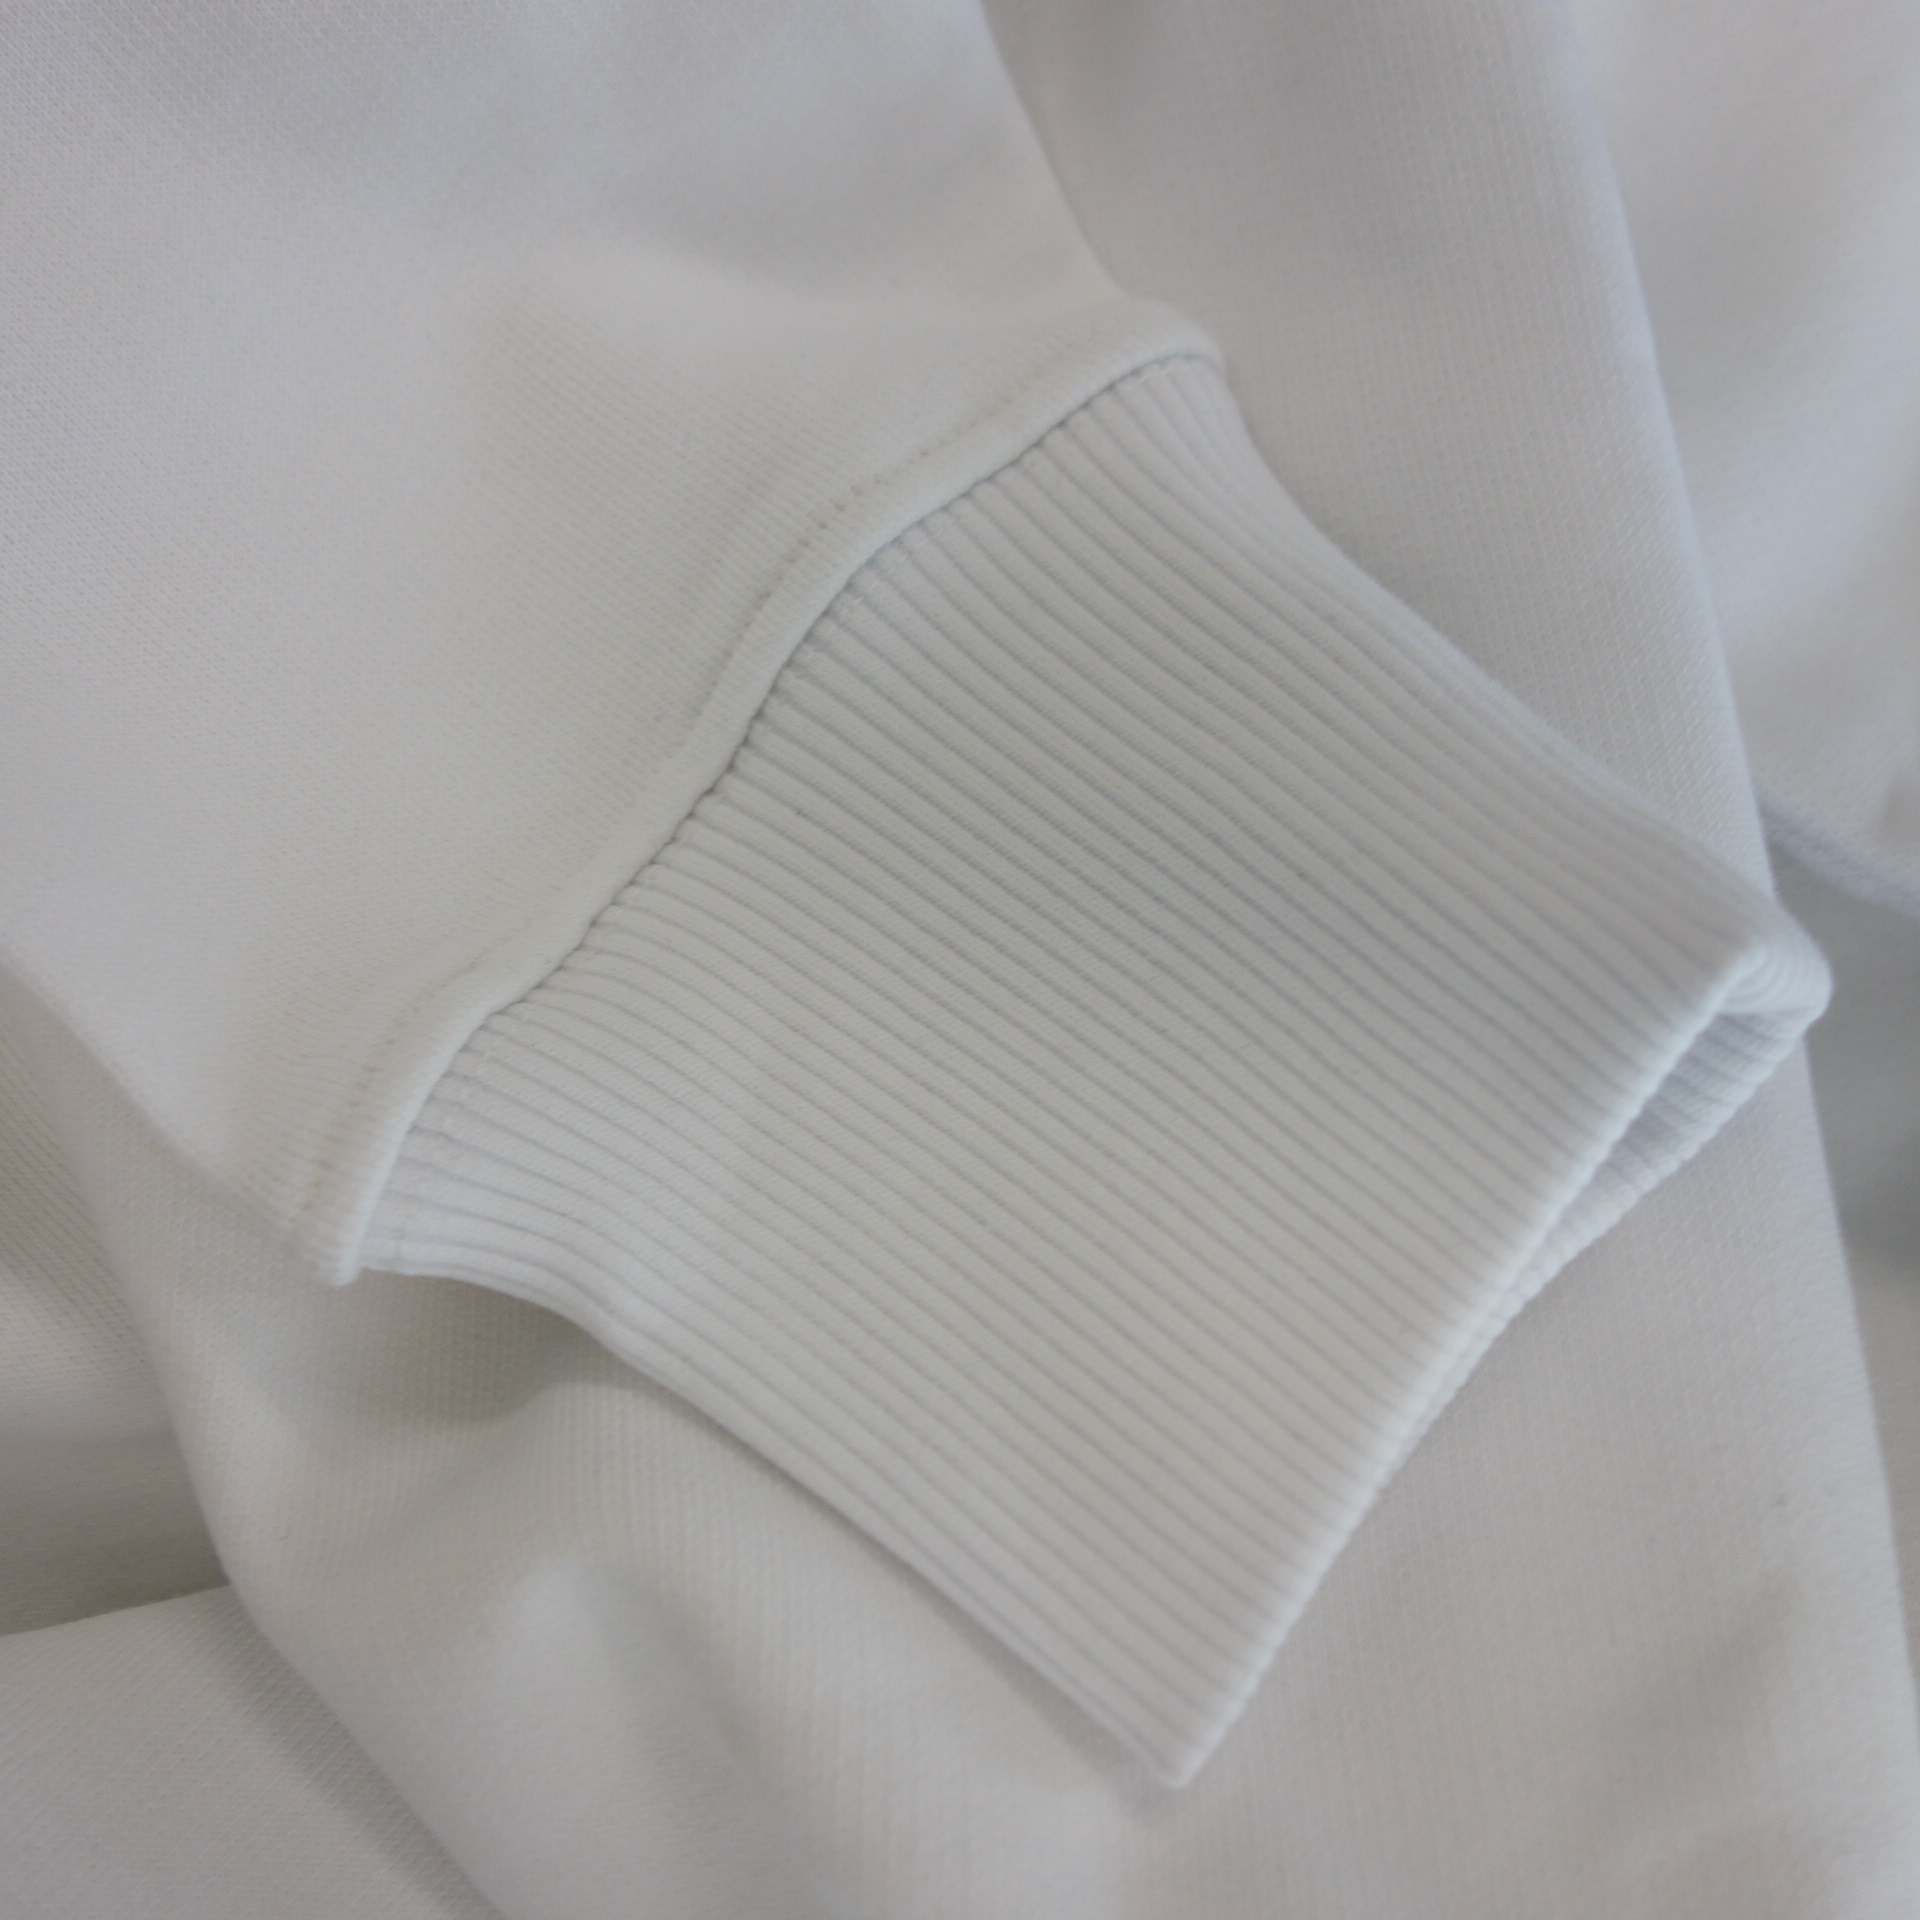 VERSACE JEANS COUTURE Herren Sweatshirt Sweater Sweat Shirt Pullover Oberteil Weiß Jersey